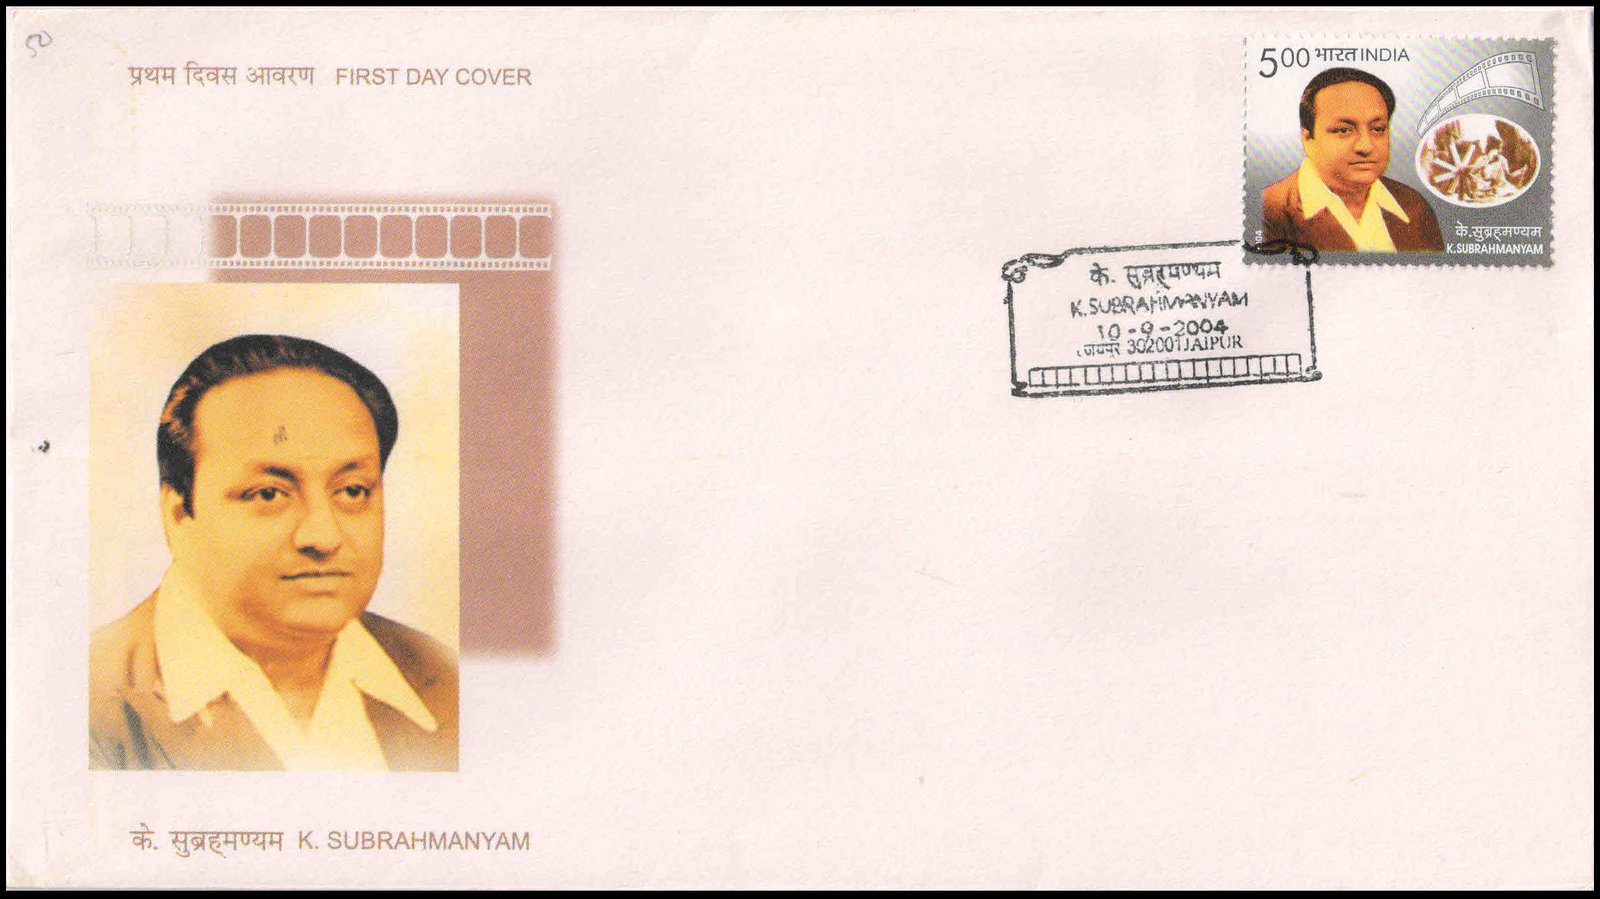 INDIA 10-9-2004, K. Subrahmanyam Rs.5, Film Maker. FDC